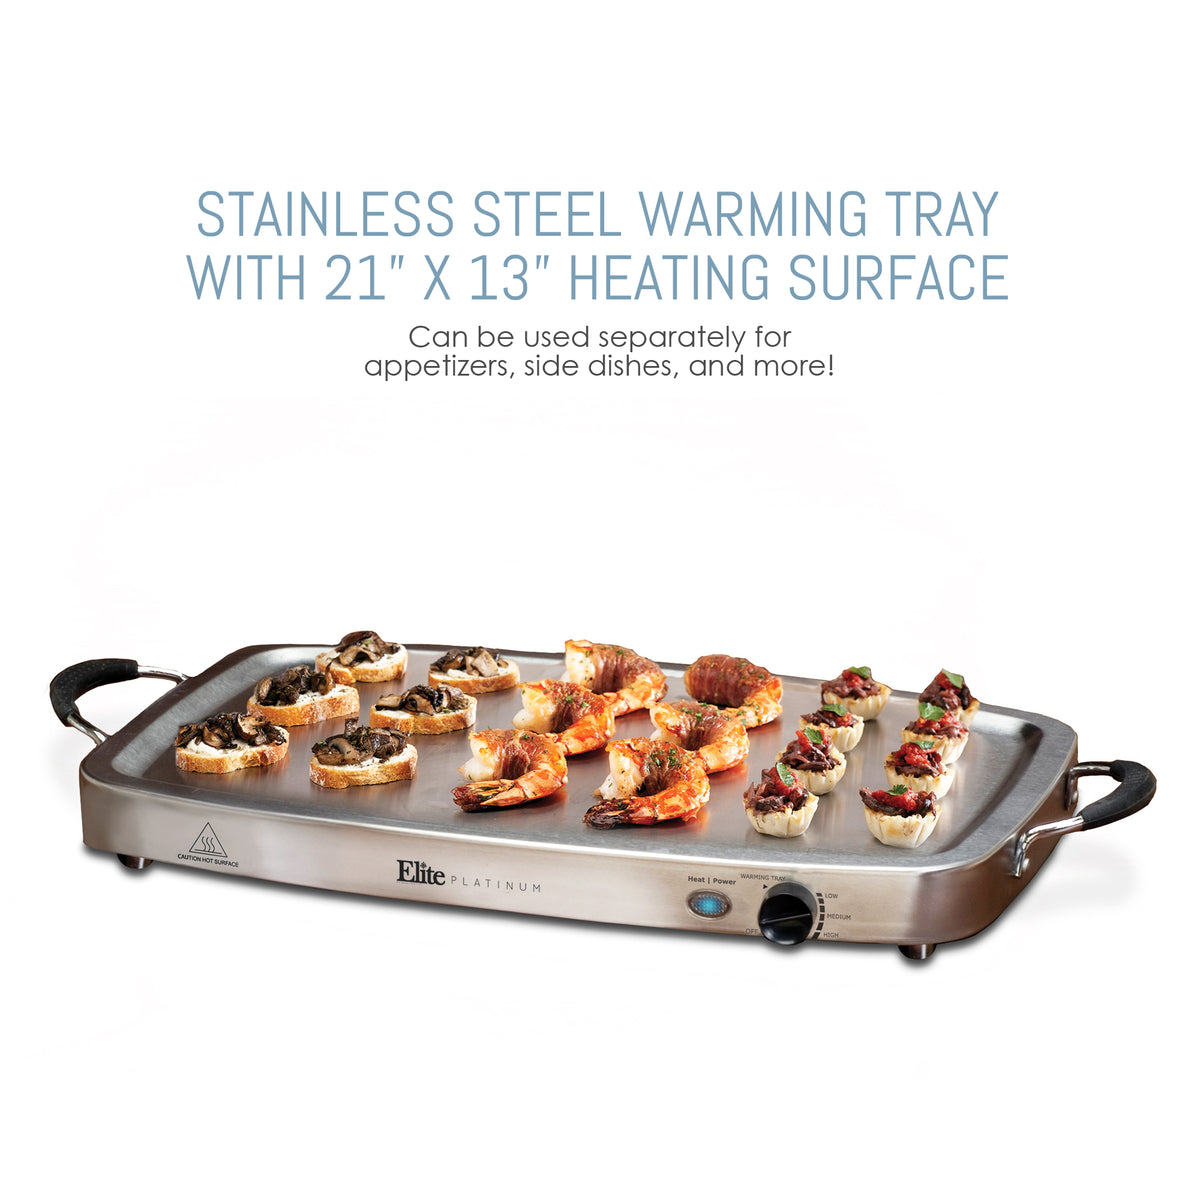 Dual Tray Stainless Steel Buffet Server [EWM-6122] – Shop Elite